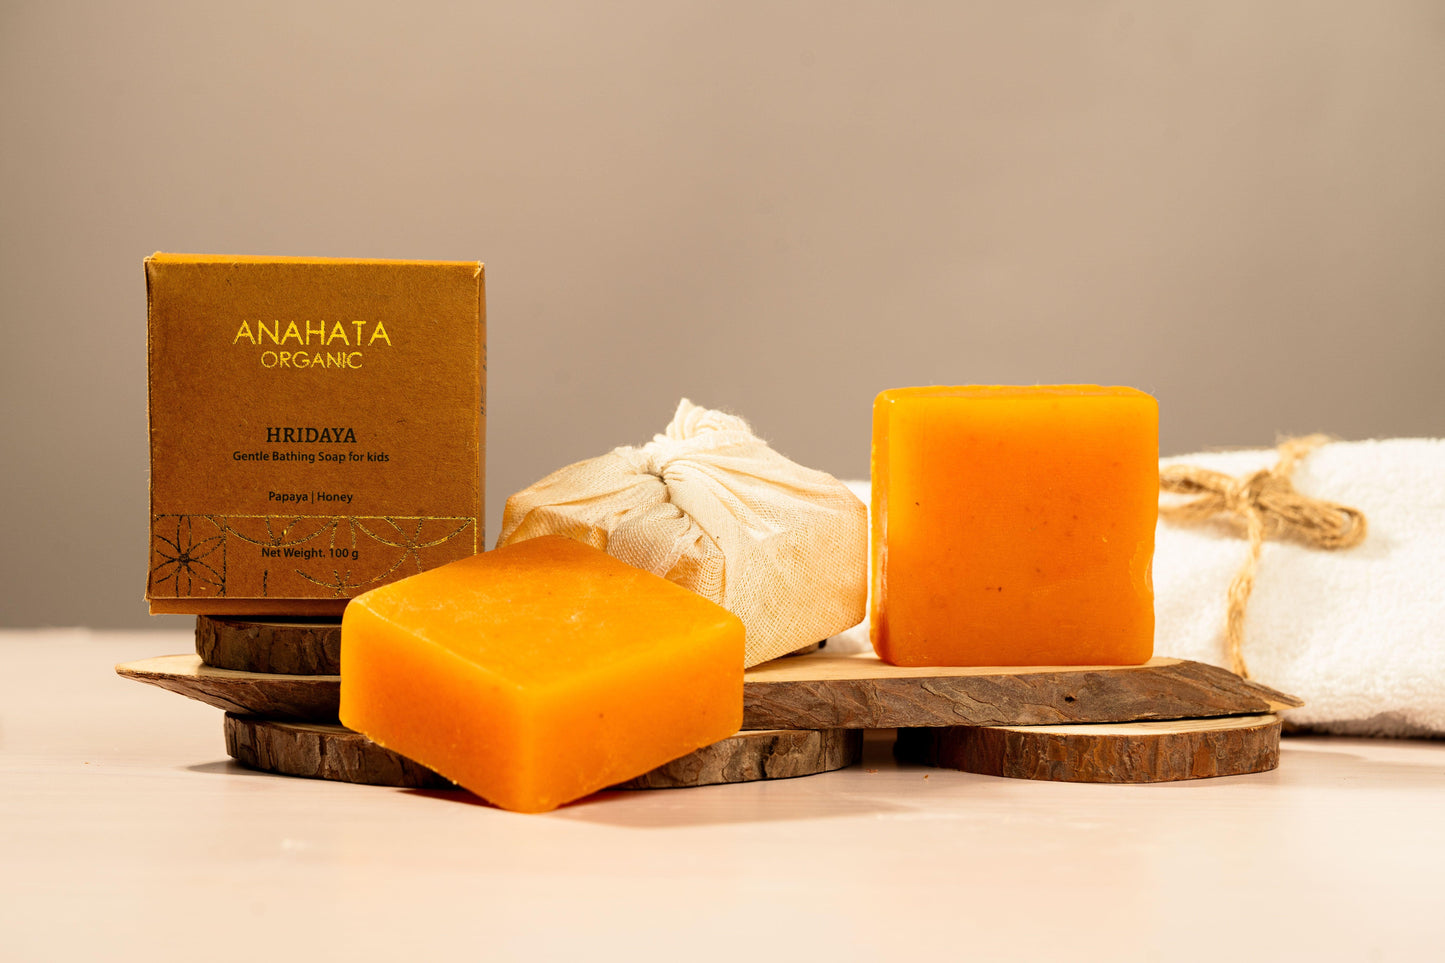 HRIDAYA Gentle Bathing Soap for kids Papaya│Honey - Anahata Organic